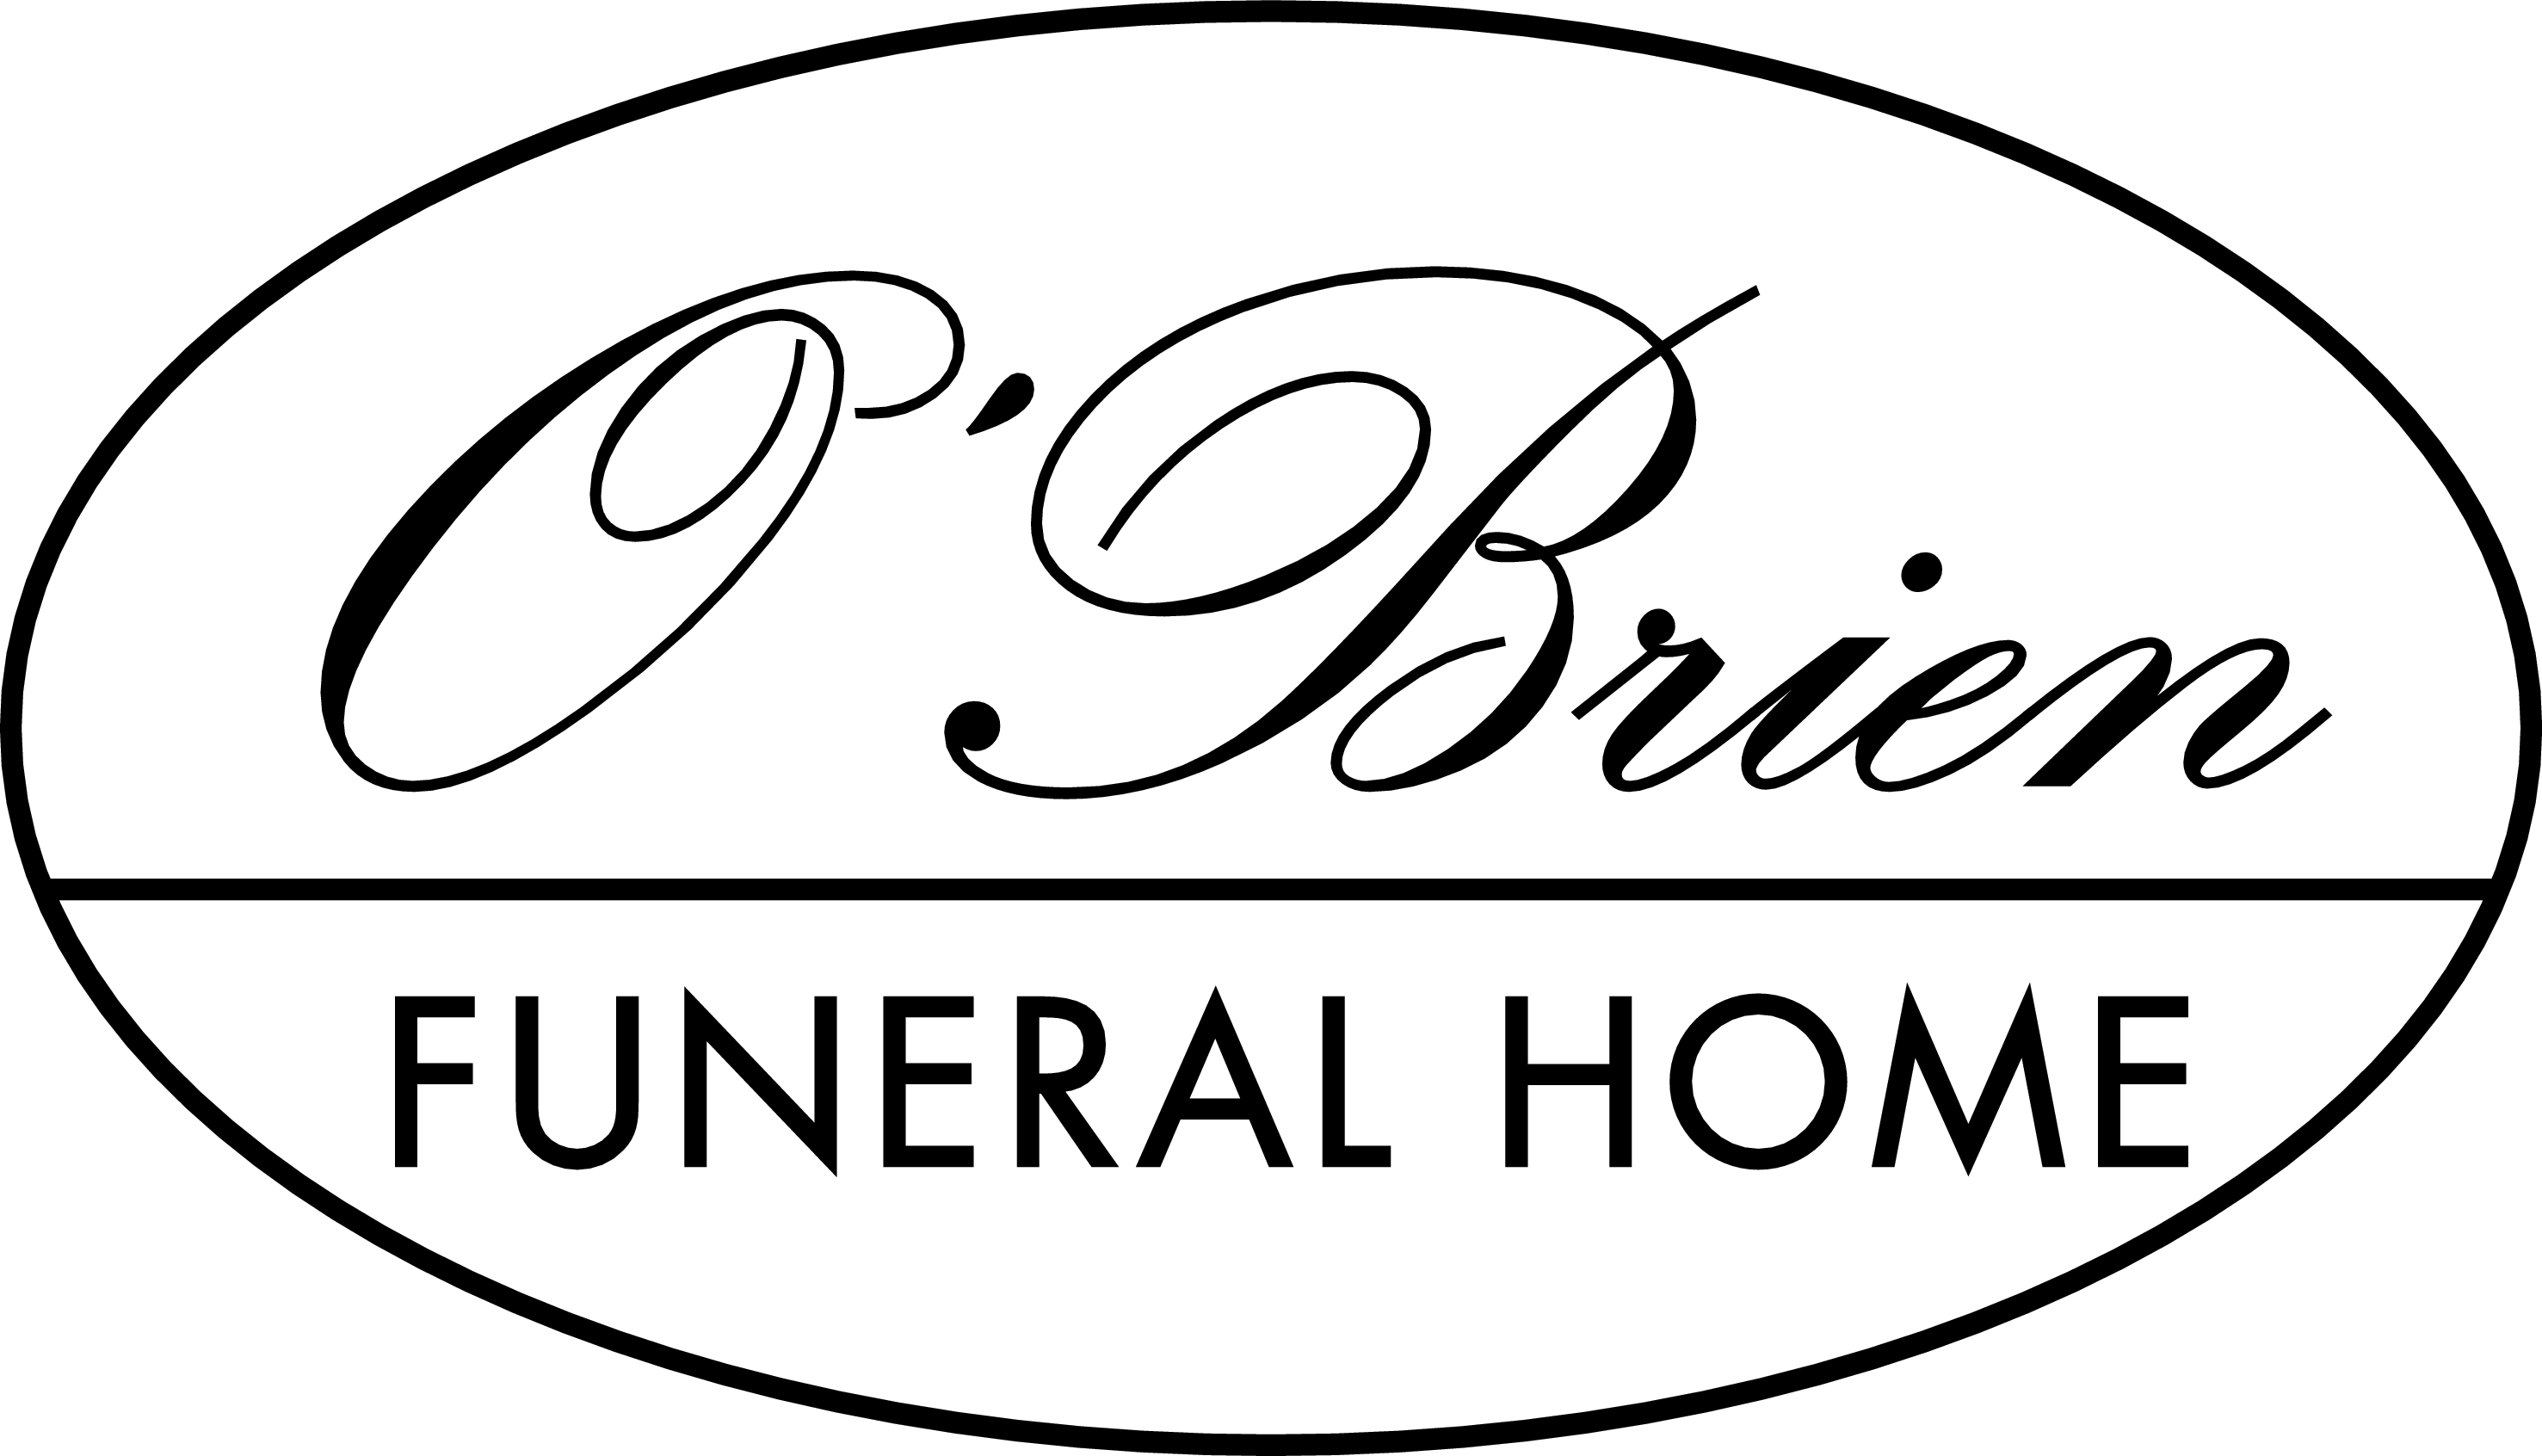 O'Brien Funeral Home